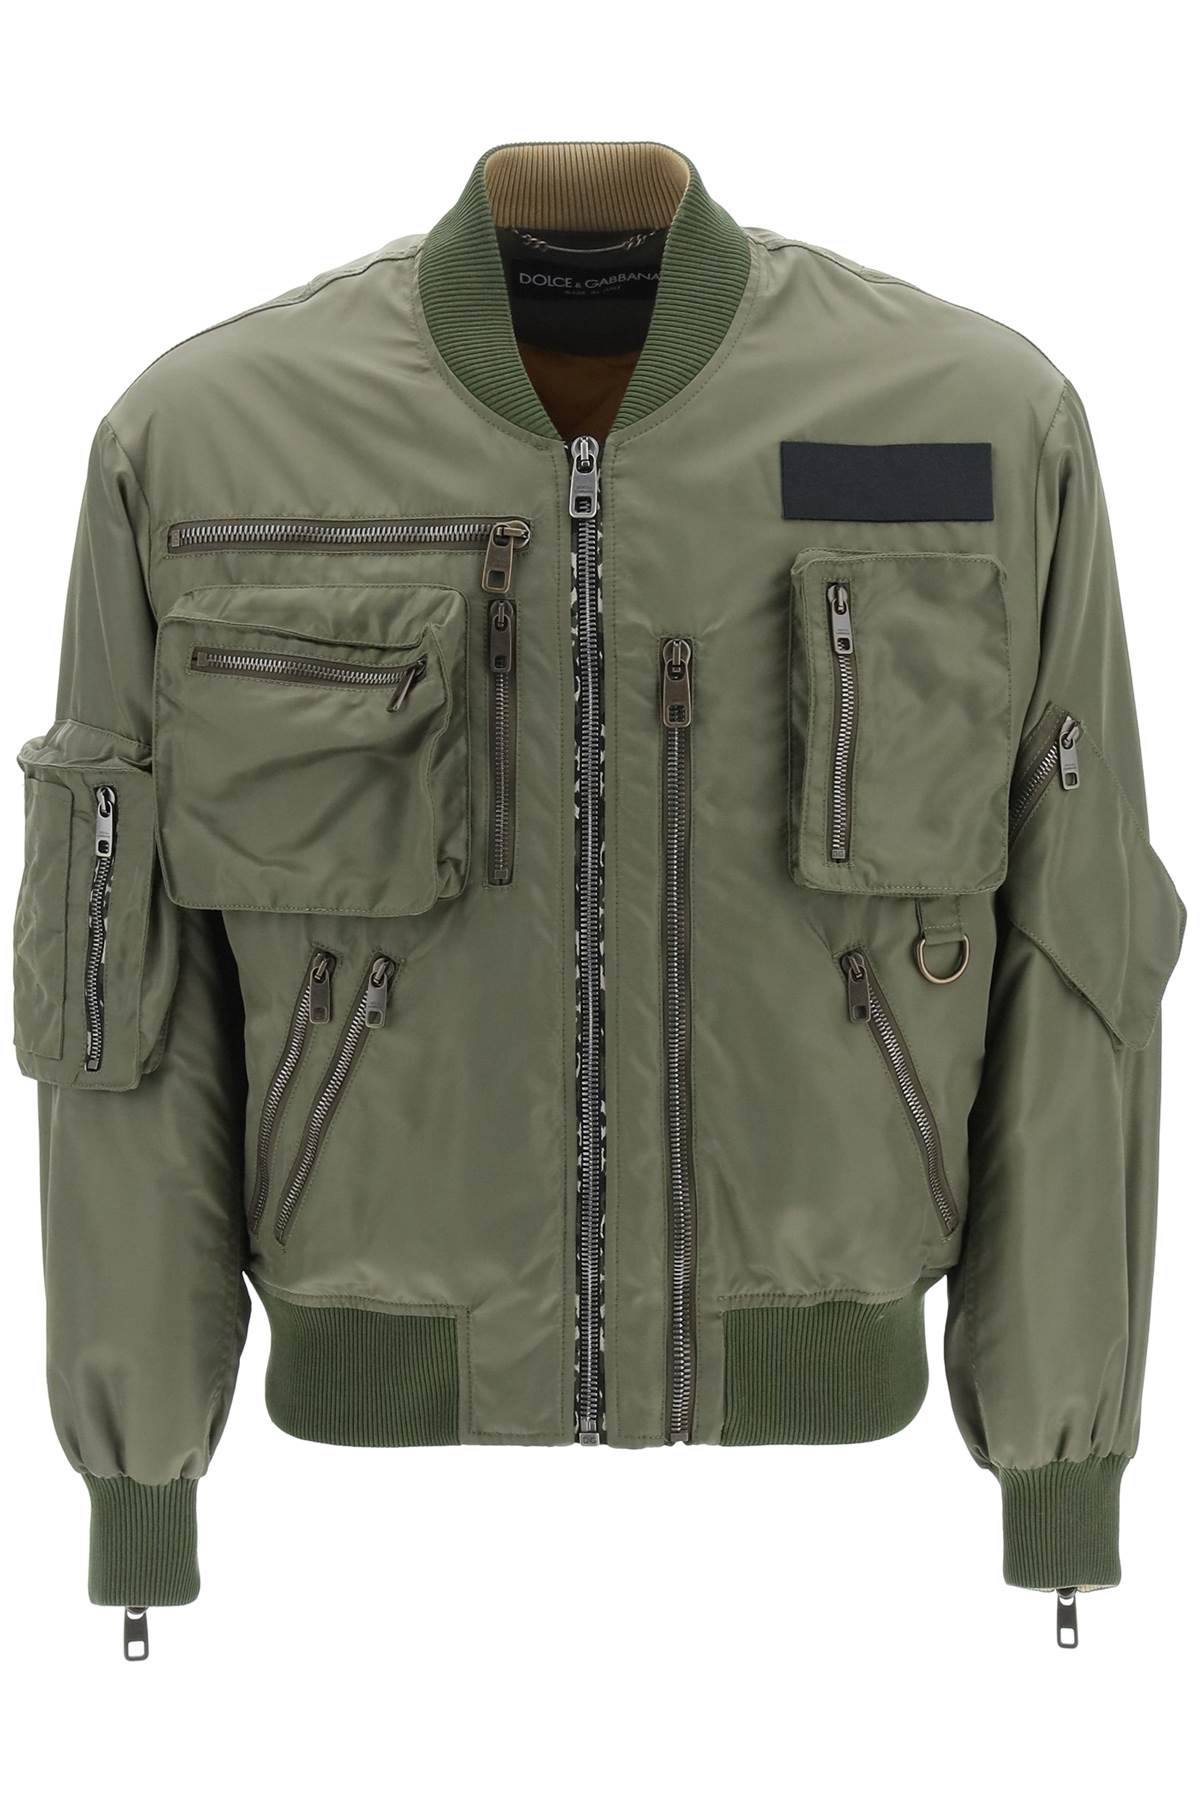 Dolce & Gabbana Multi-zip Bomber Jacket